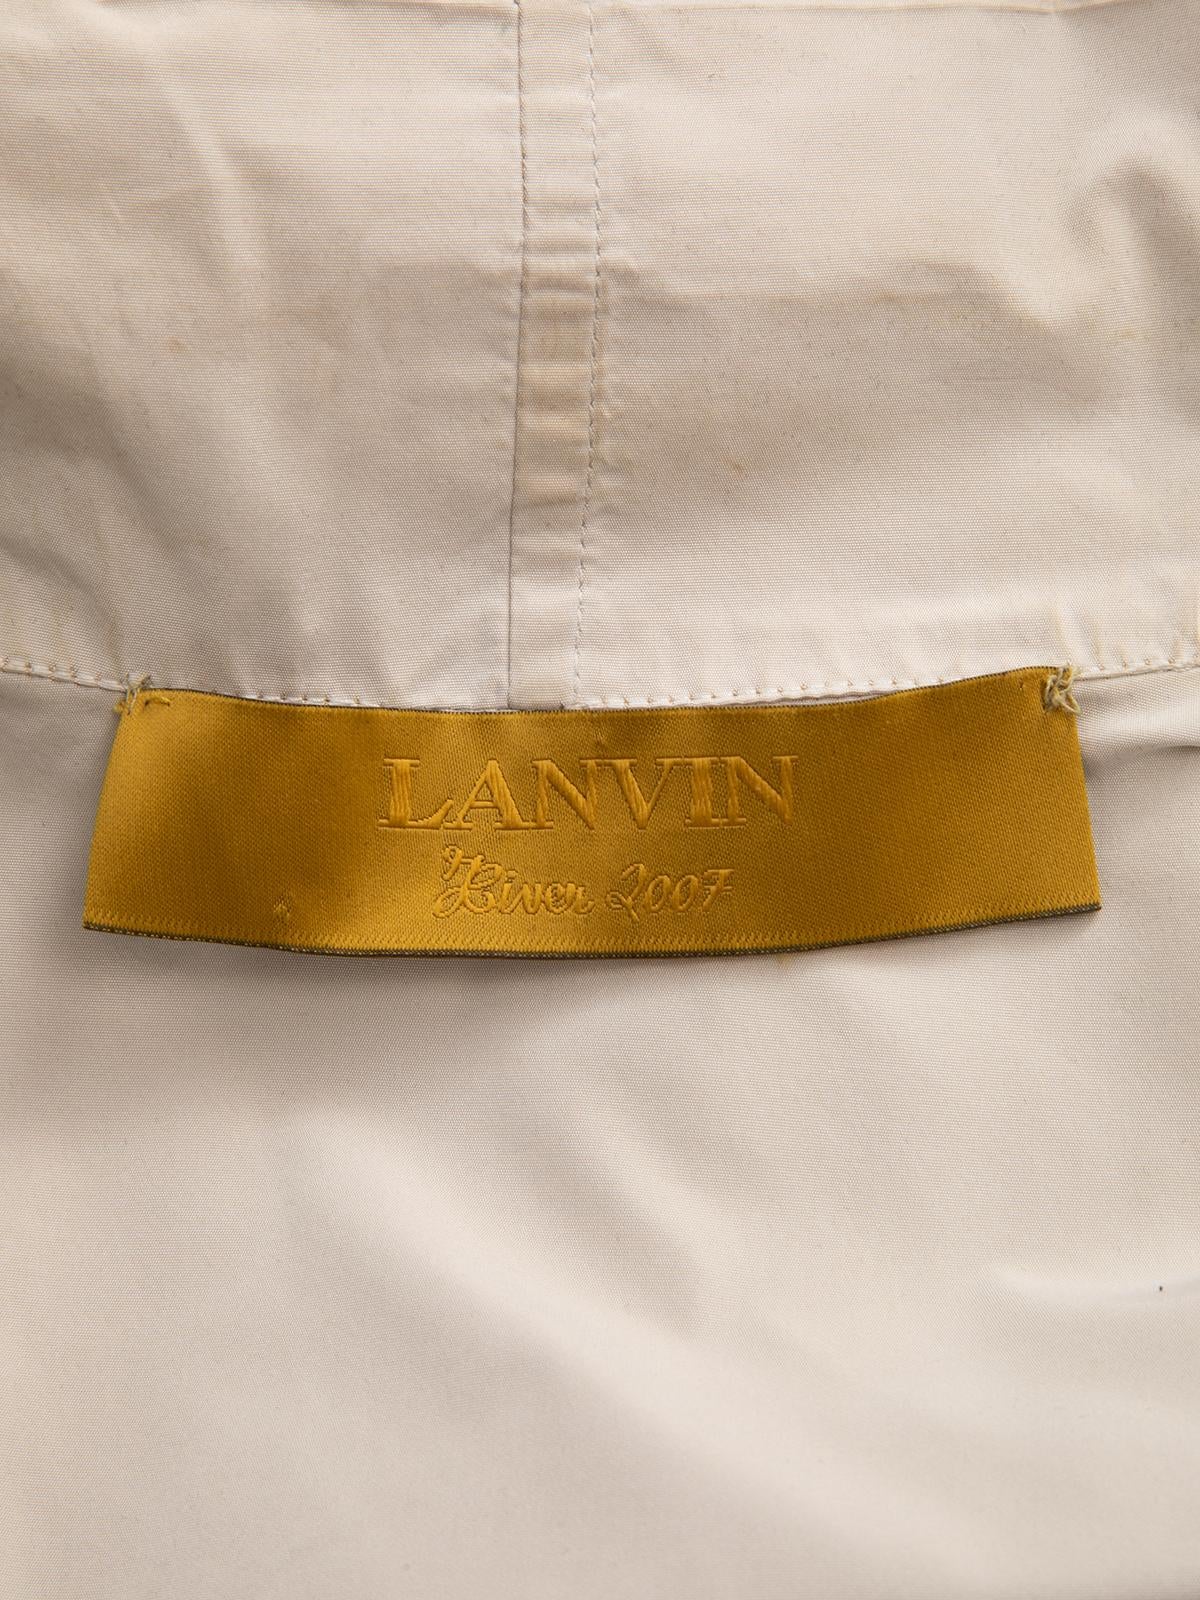 Pre-Loved Lanvin Women's Beige Zip Up Long Sleeve Shirt with Ruffle Trim 3